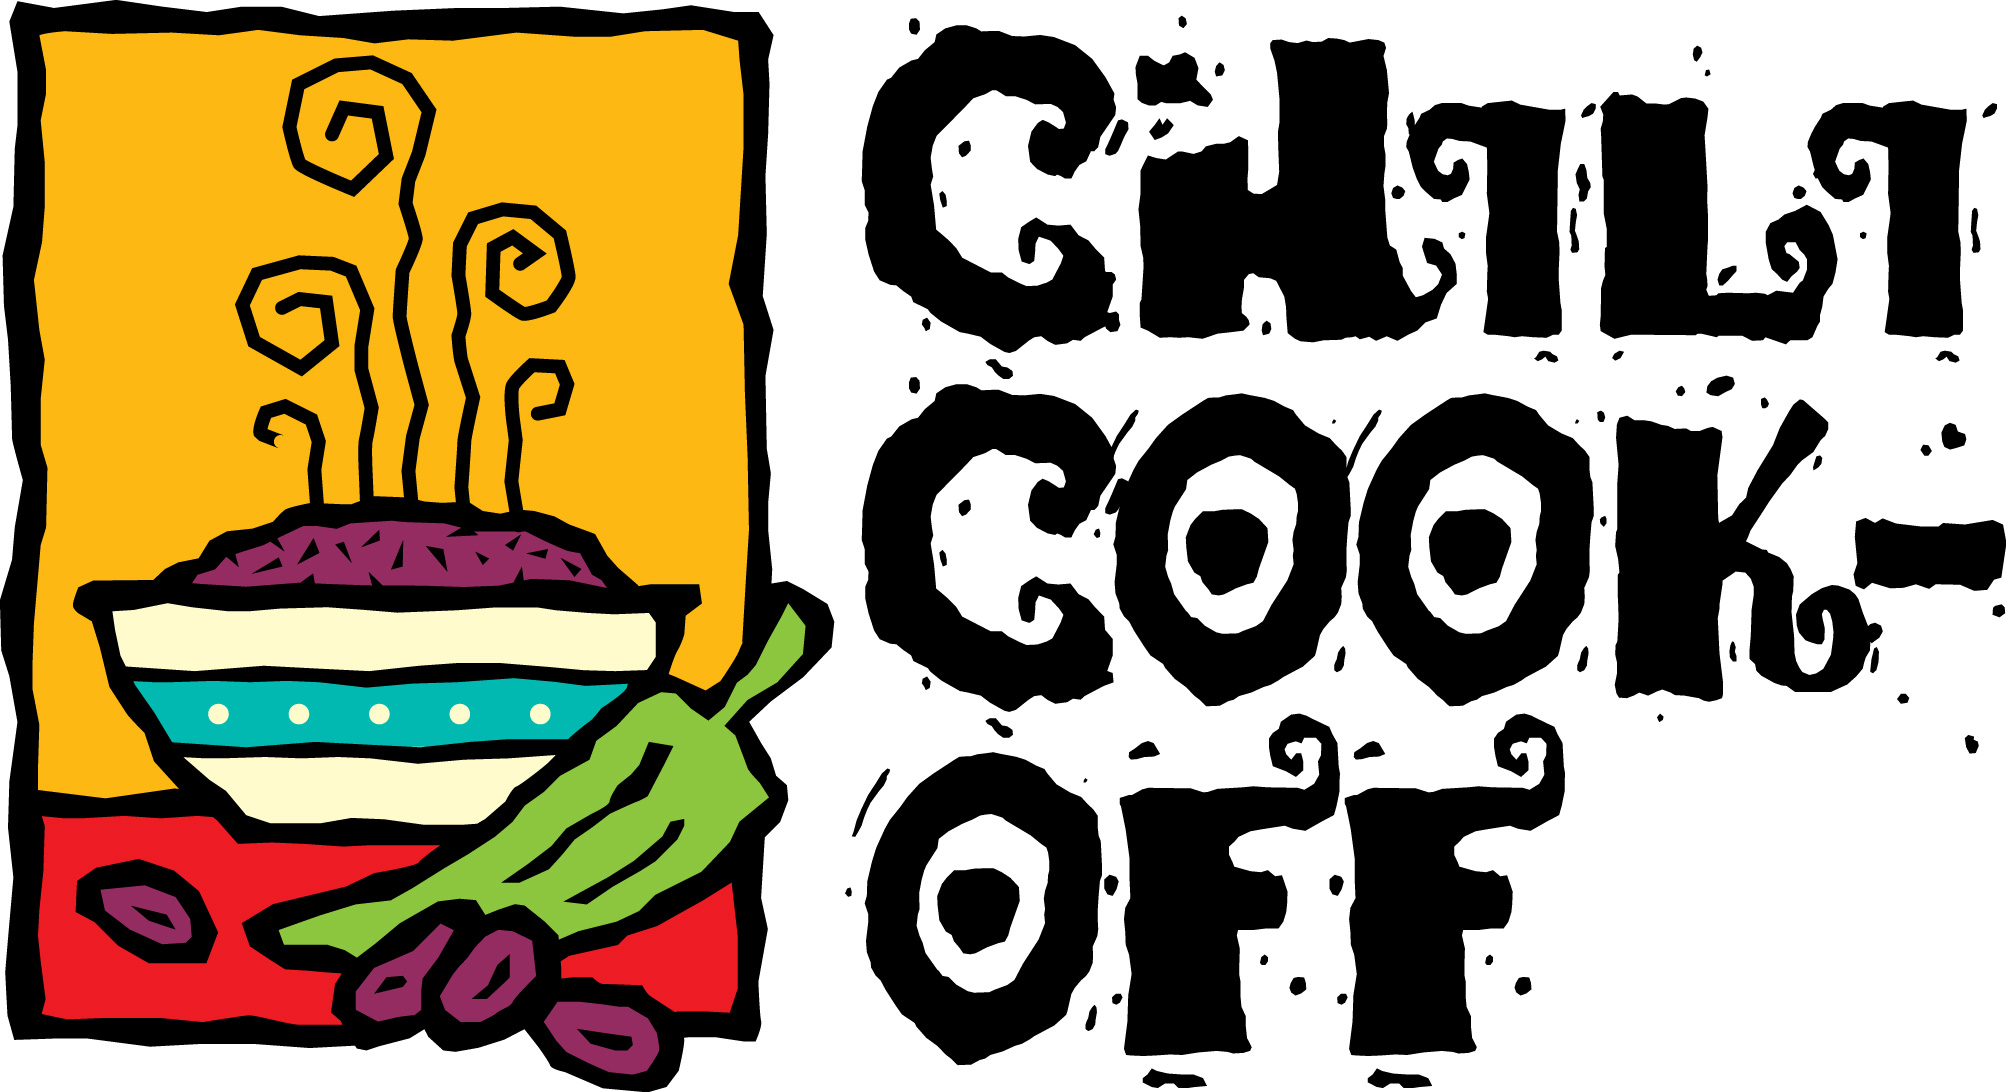 Chili Cook Off Borders Clipar - Chili Cook Off Clipart